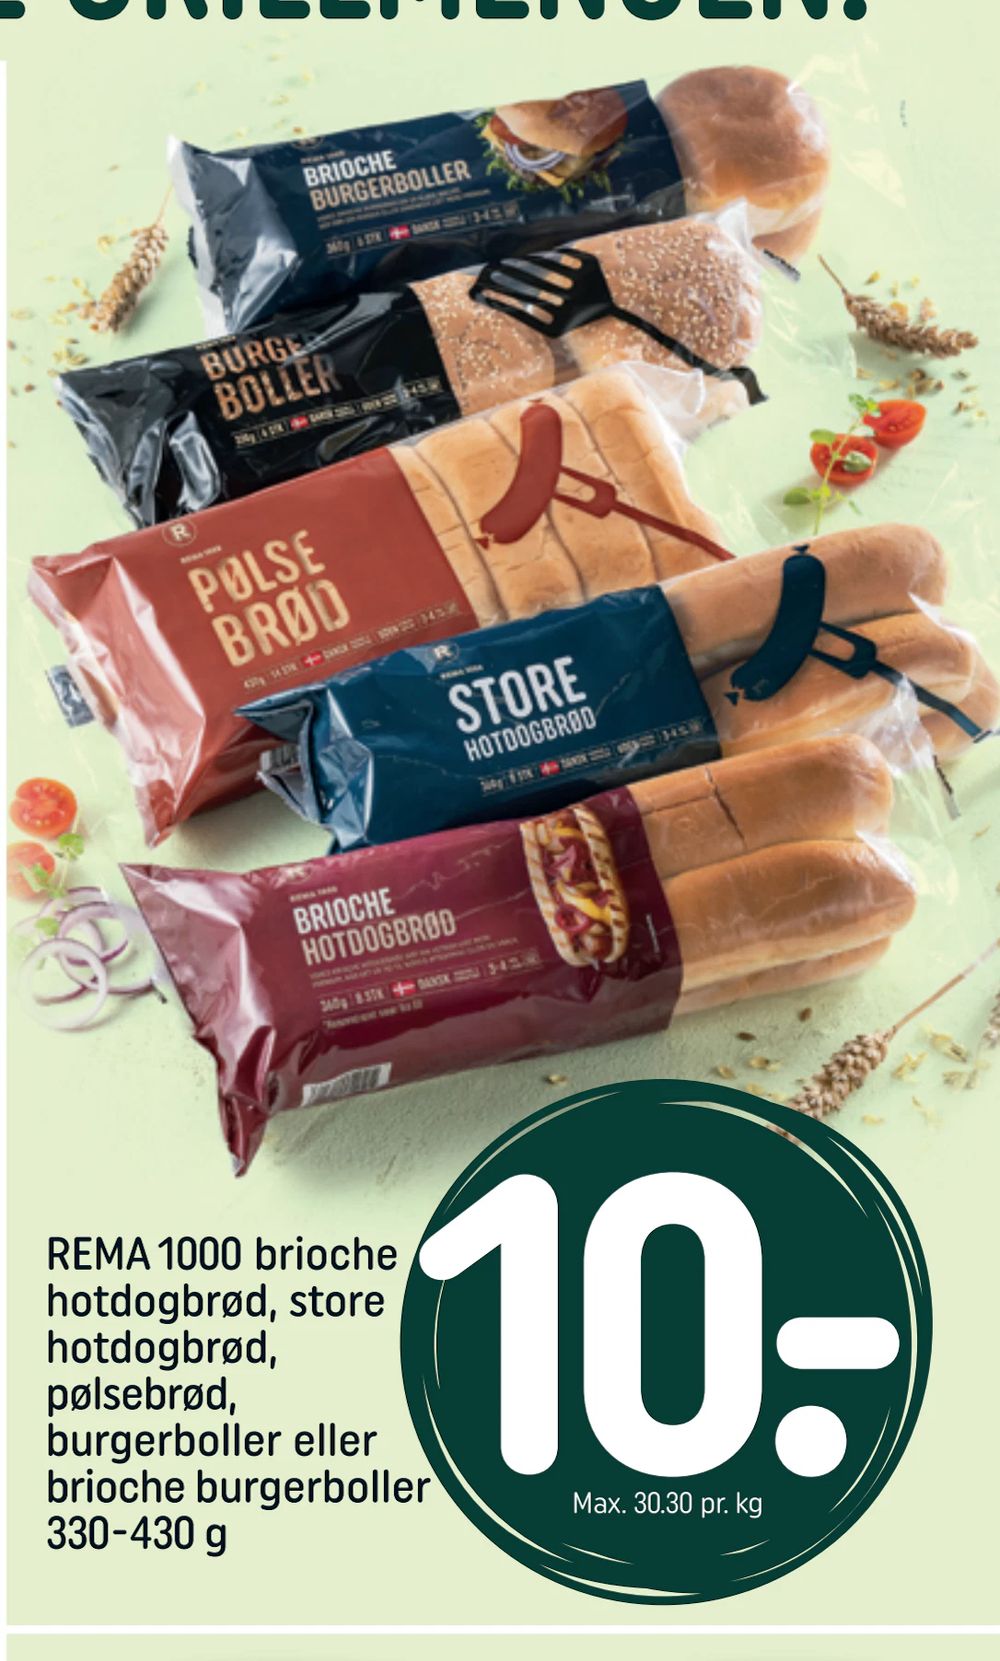 Tilbud på REMA 1000 brioche hotdogbrød, store hotdogbrød, pølsebrød, burgerboller eller brioche burgerboller 330-430 g fra REMA 1000 til 10 kr.